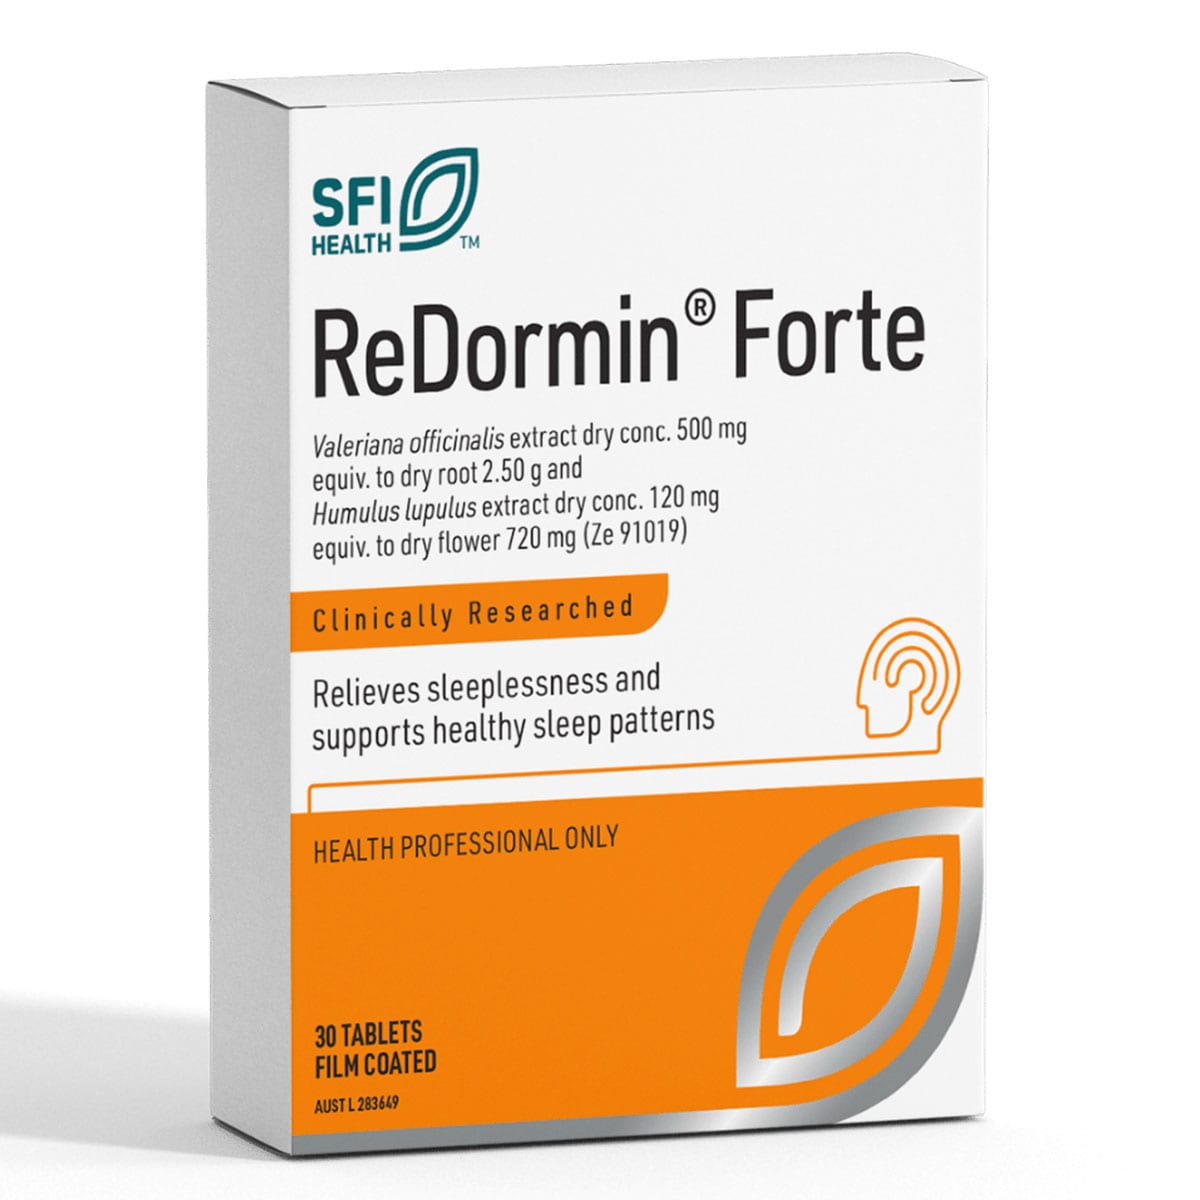 SFI Health Redormin Forte 30 Tablets